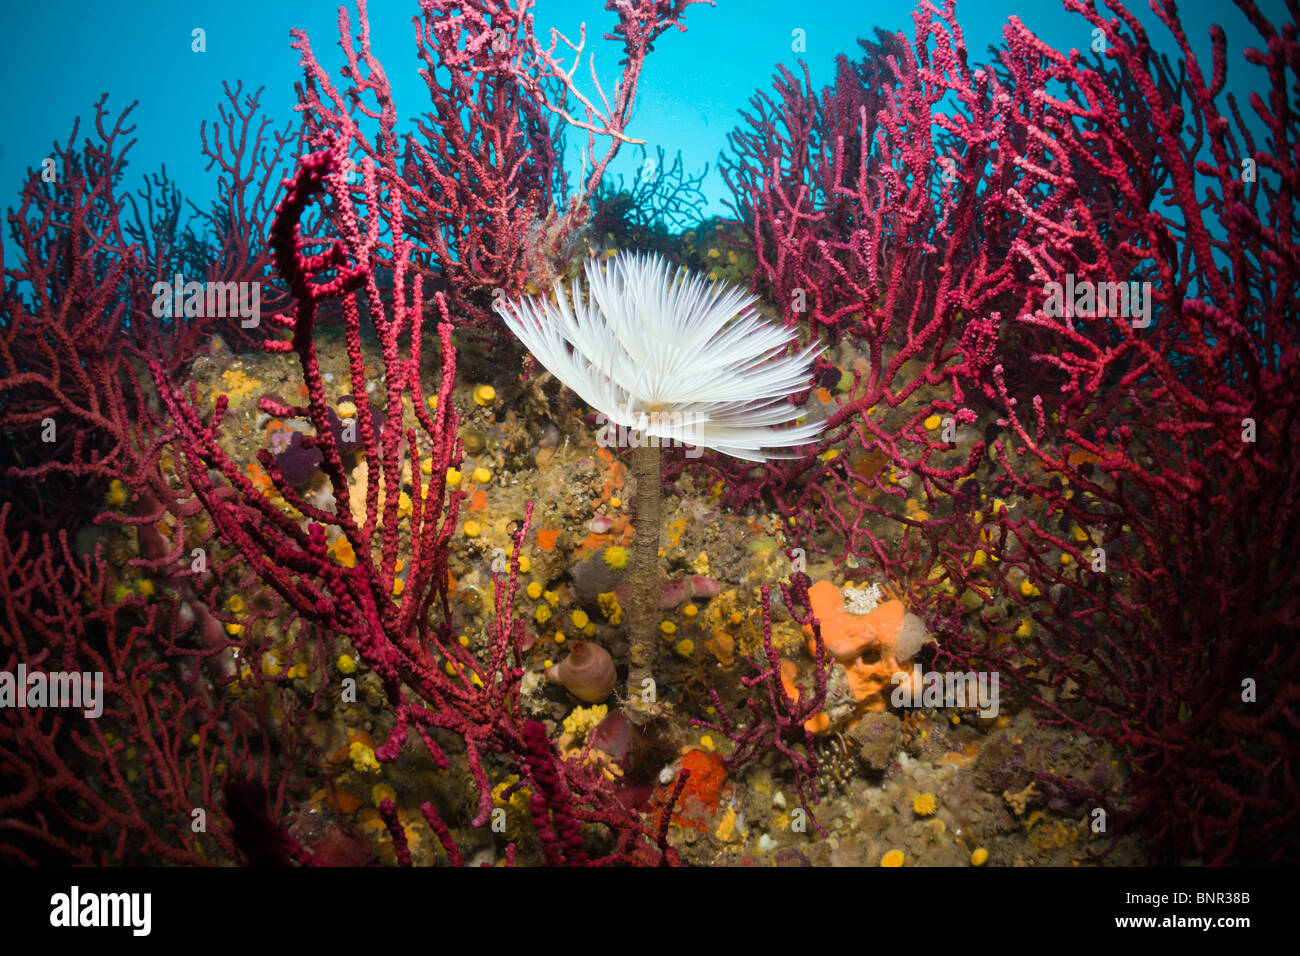 Spiral Tube Worm in Coral Reef, Spirographis spallanzani, Cap de Creus, Costa Brava, Spain Stock Photo